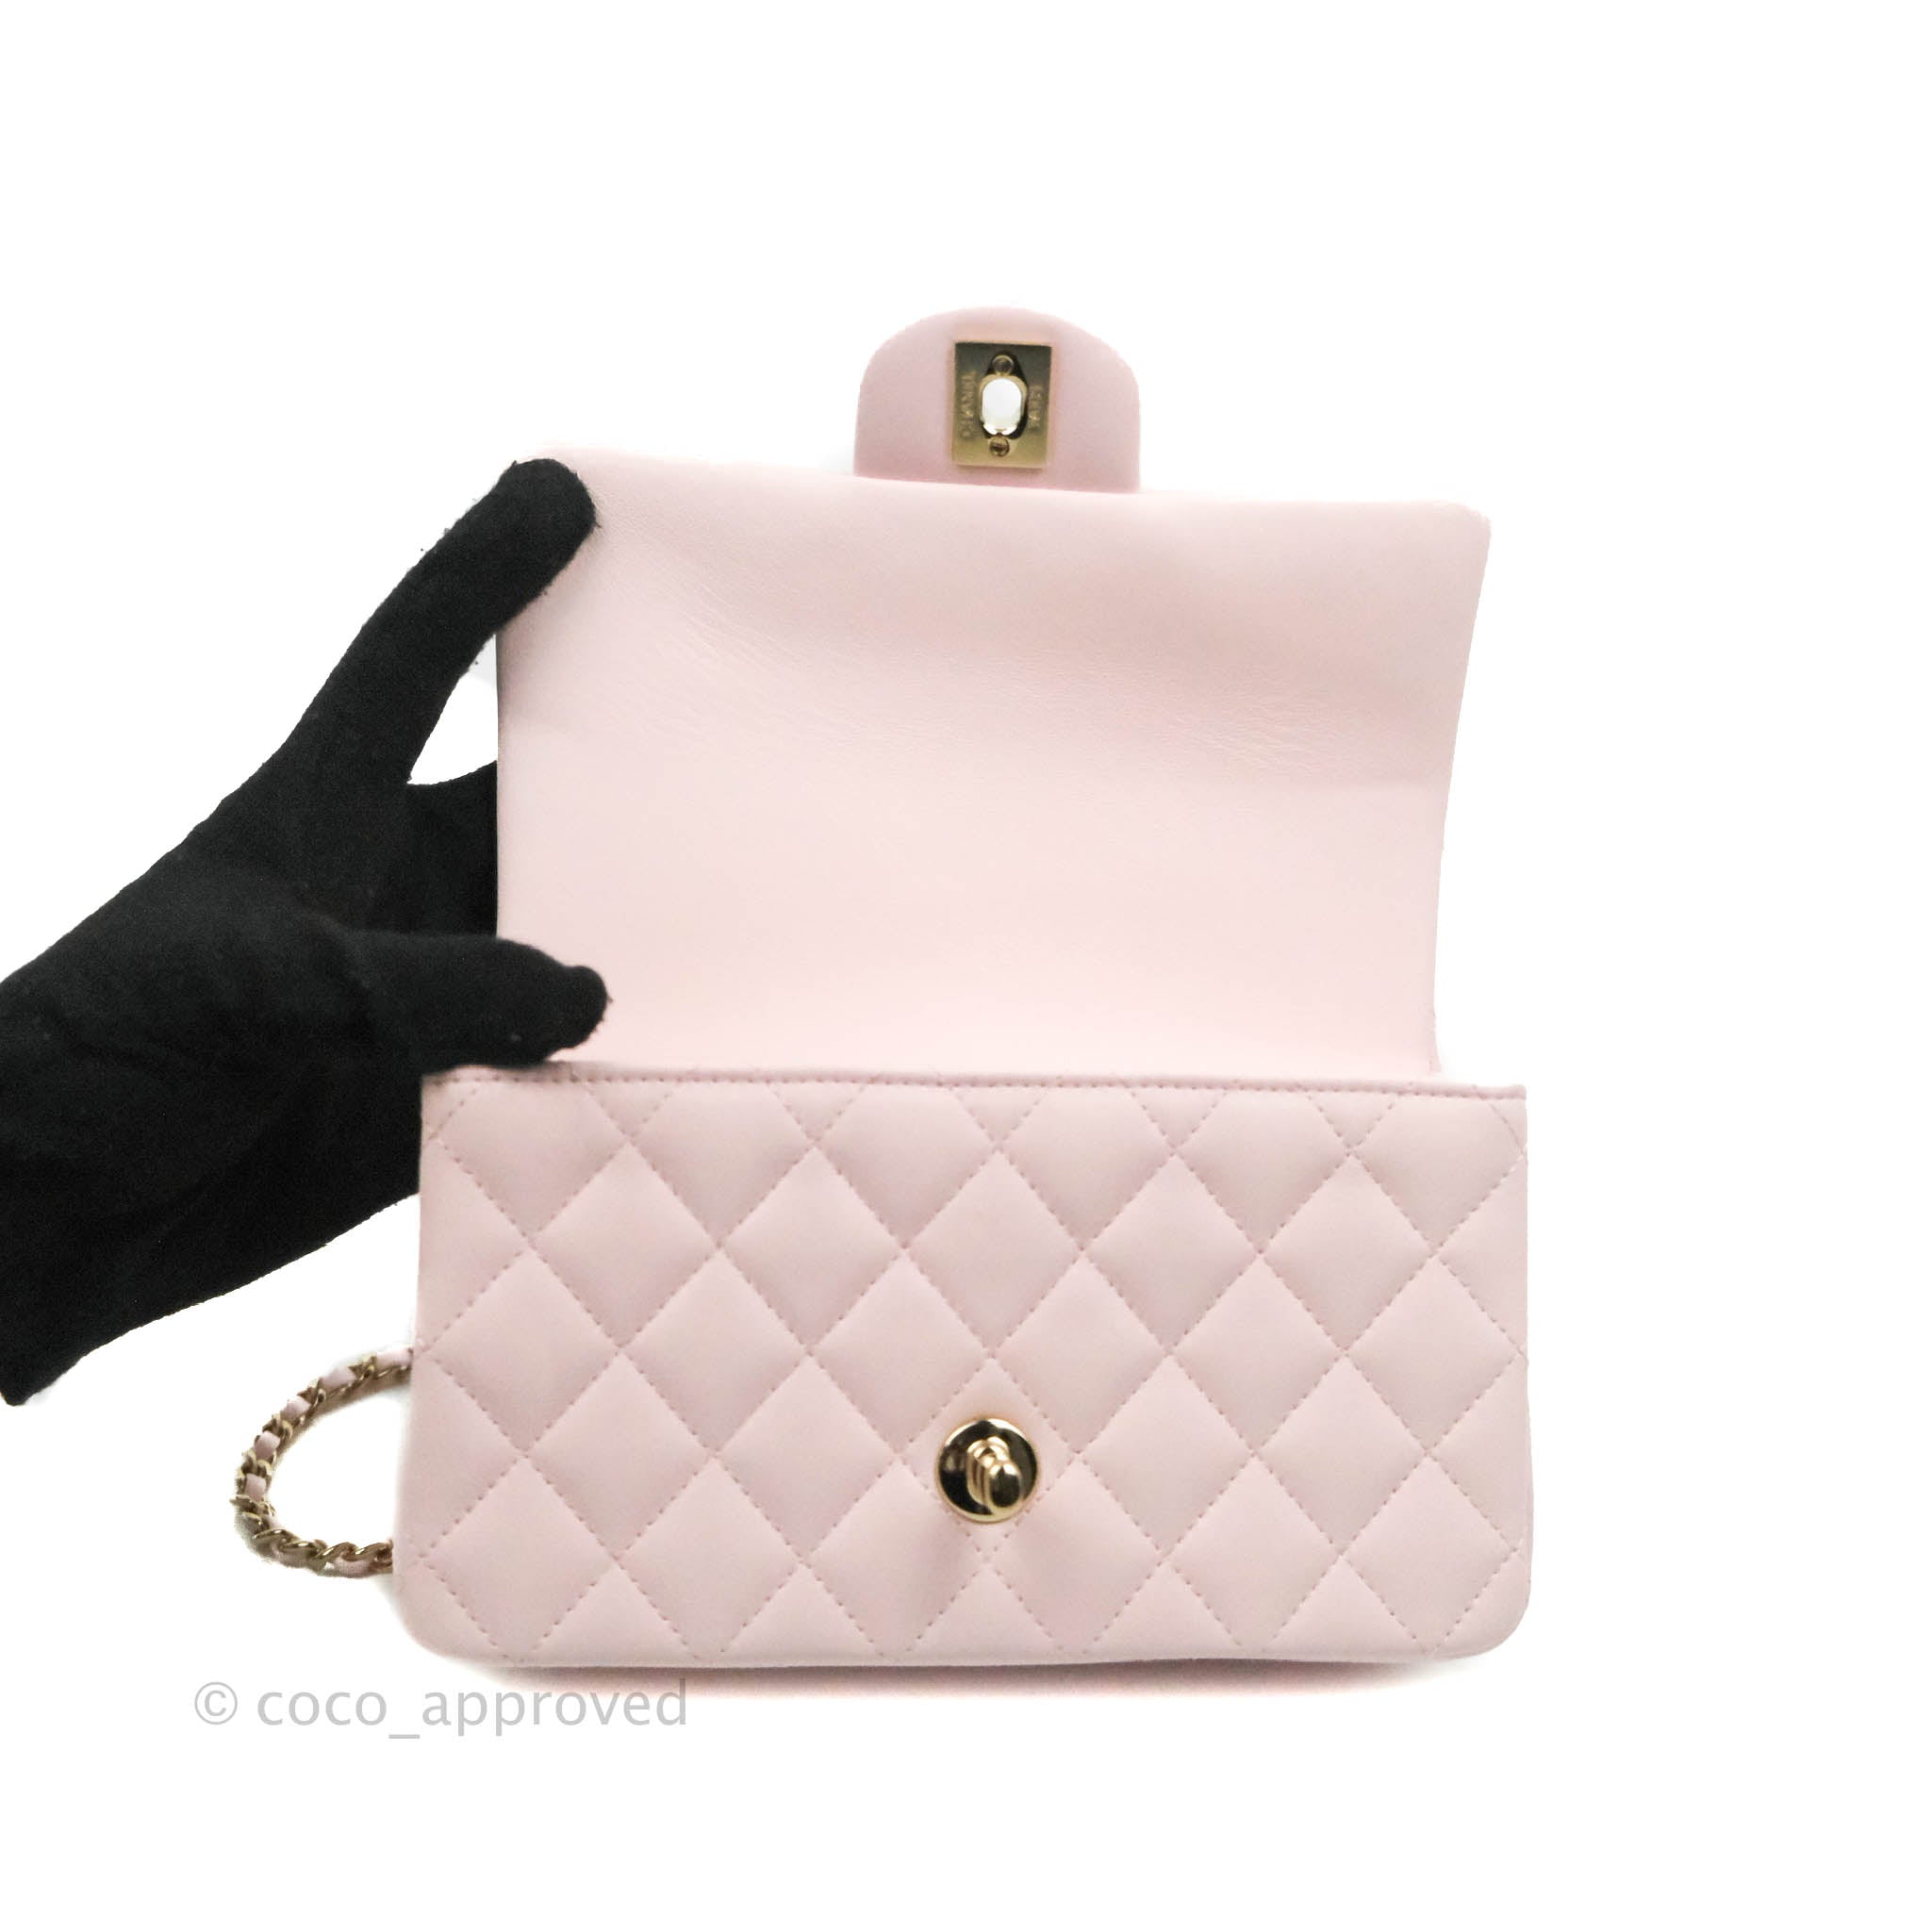 CHANEL, Bags, New 23p Chanel Mini Top Handle Rectangle Flap Black Pink Bag  Handbag